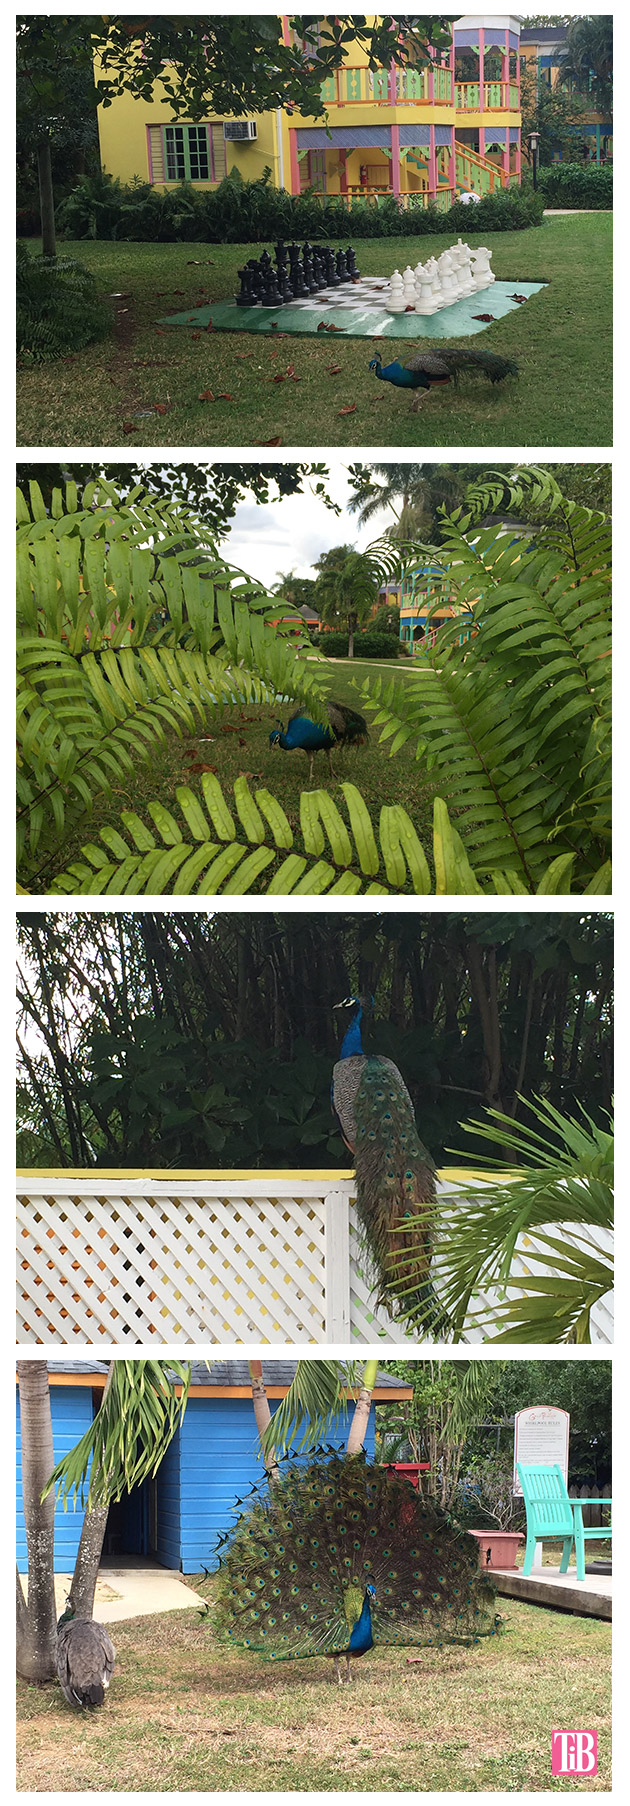 Jamaica-peacock